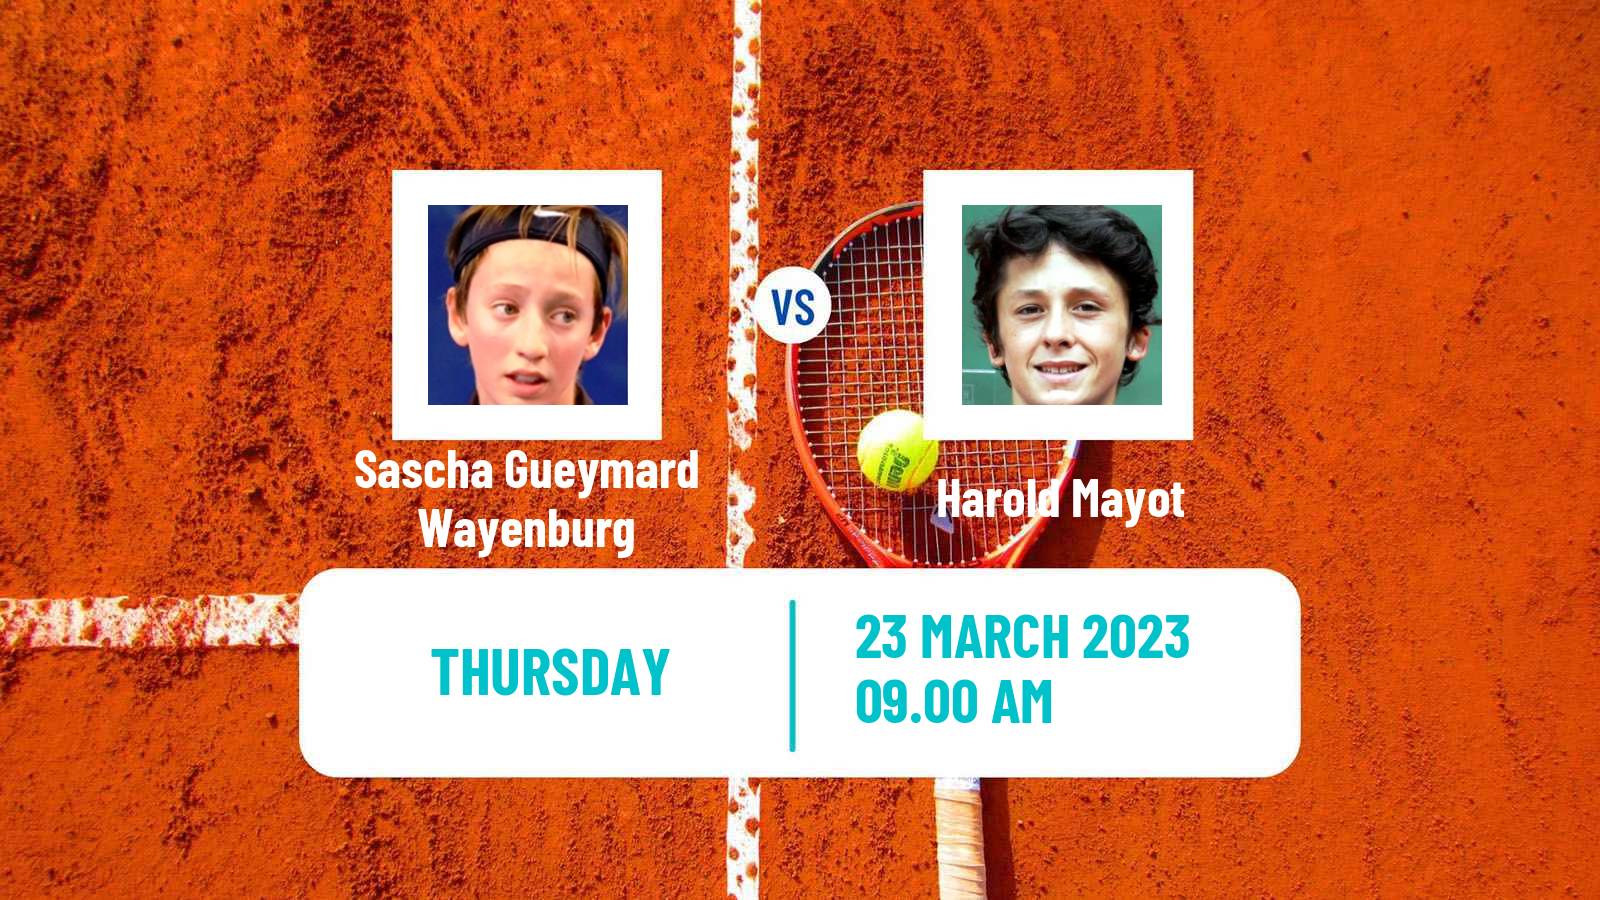 Tennis ATP Challenger Sascha Gueymard Wayenburg - Harold Mayot